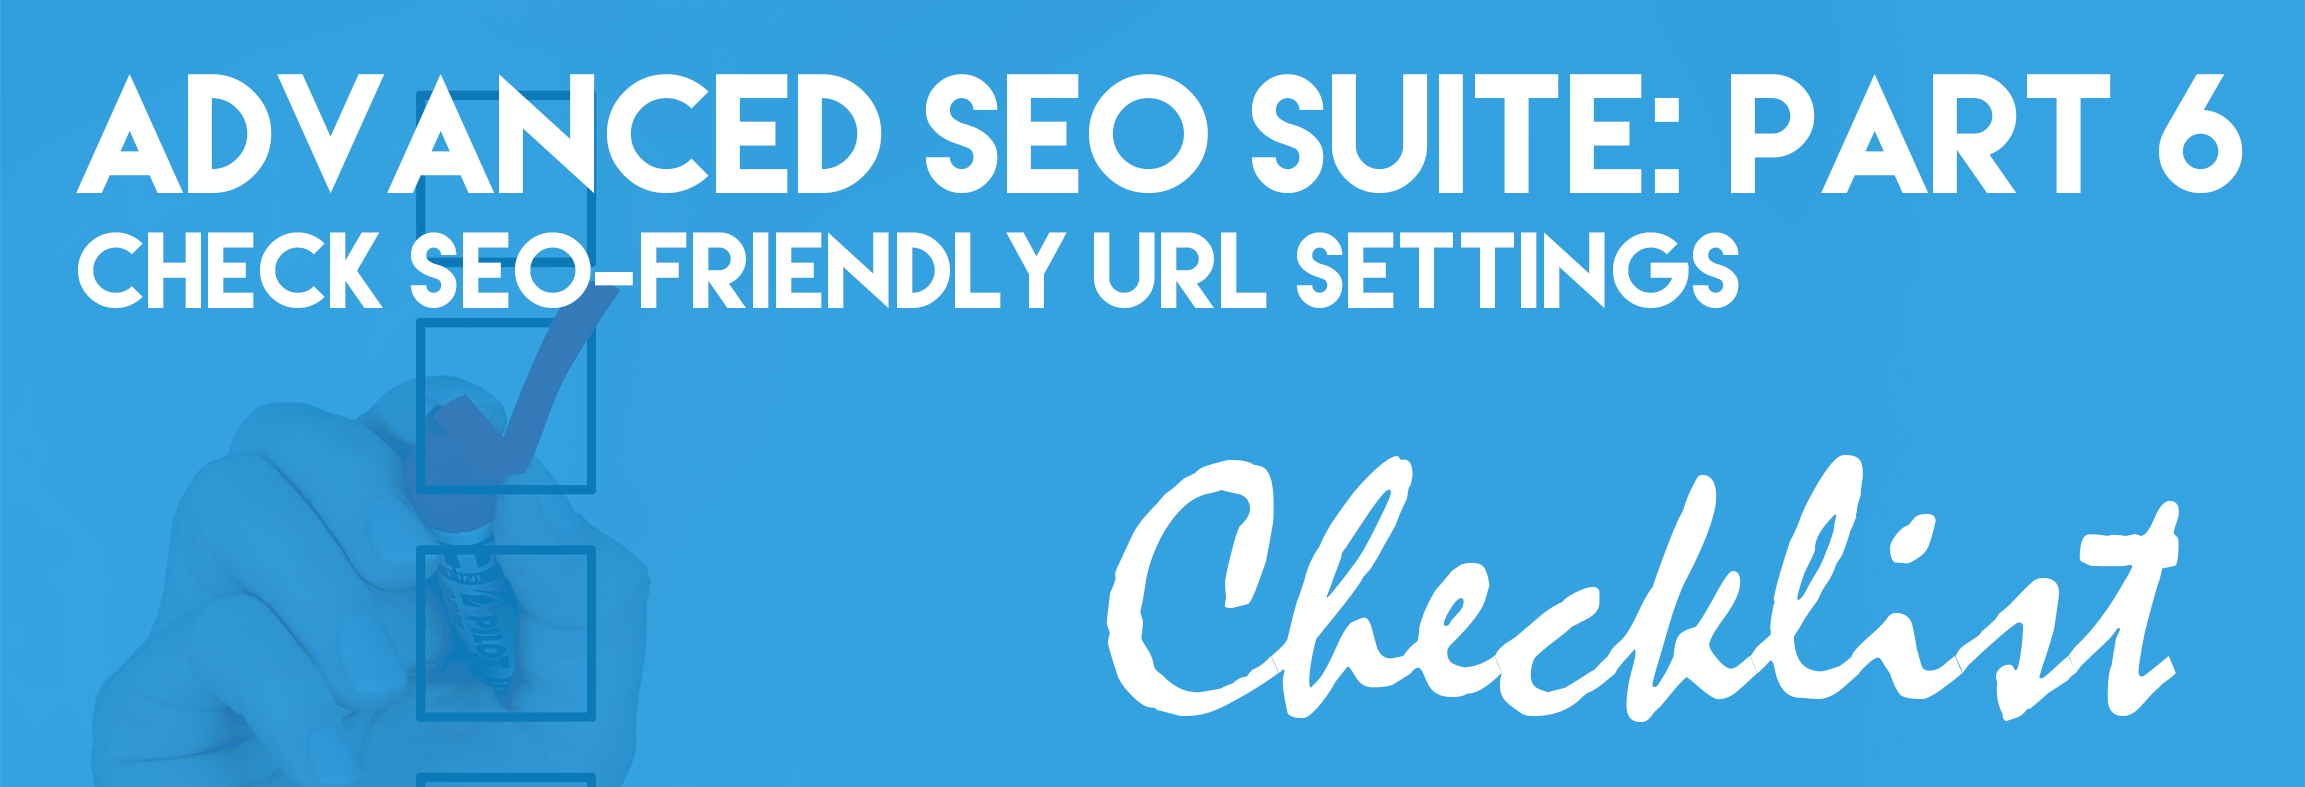 Advanced SEO Suite Onboarding Checklist (Part 6): Check SEO-friendly URL Settings